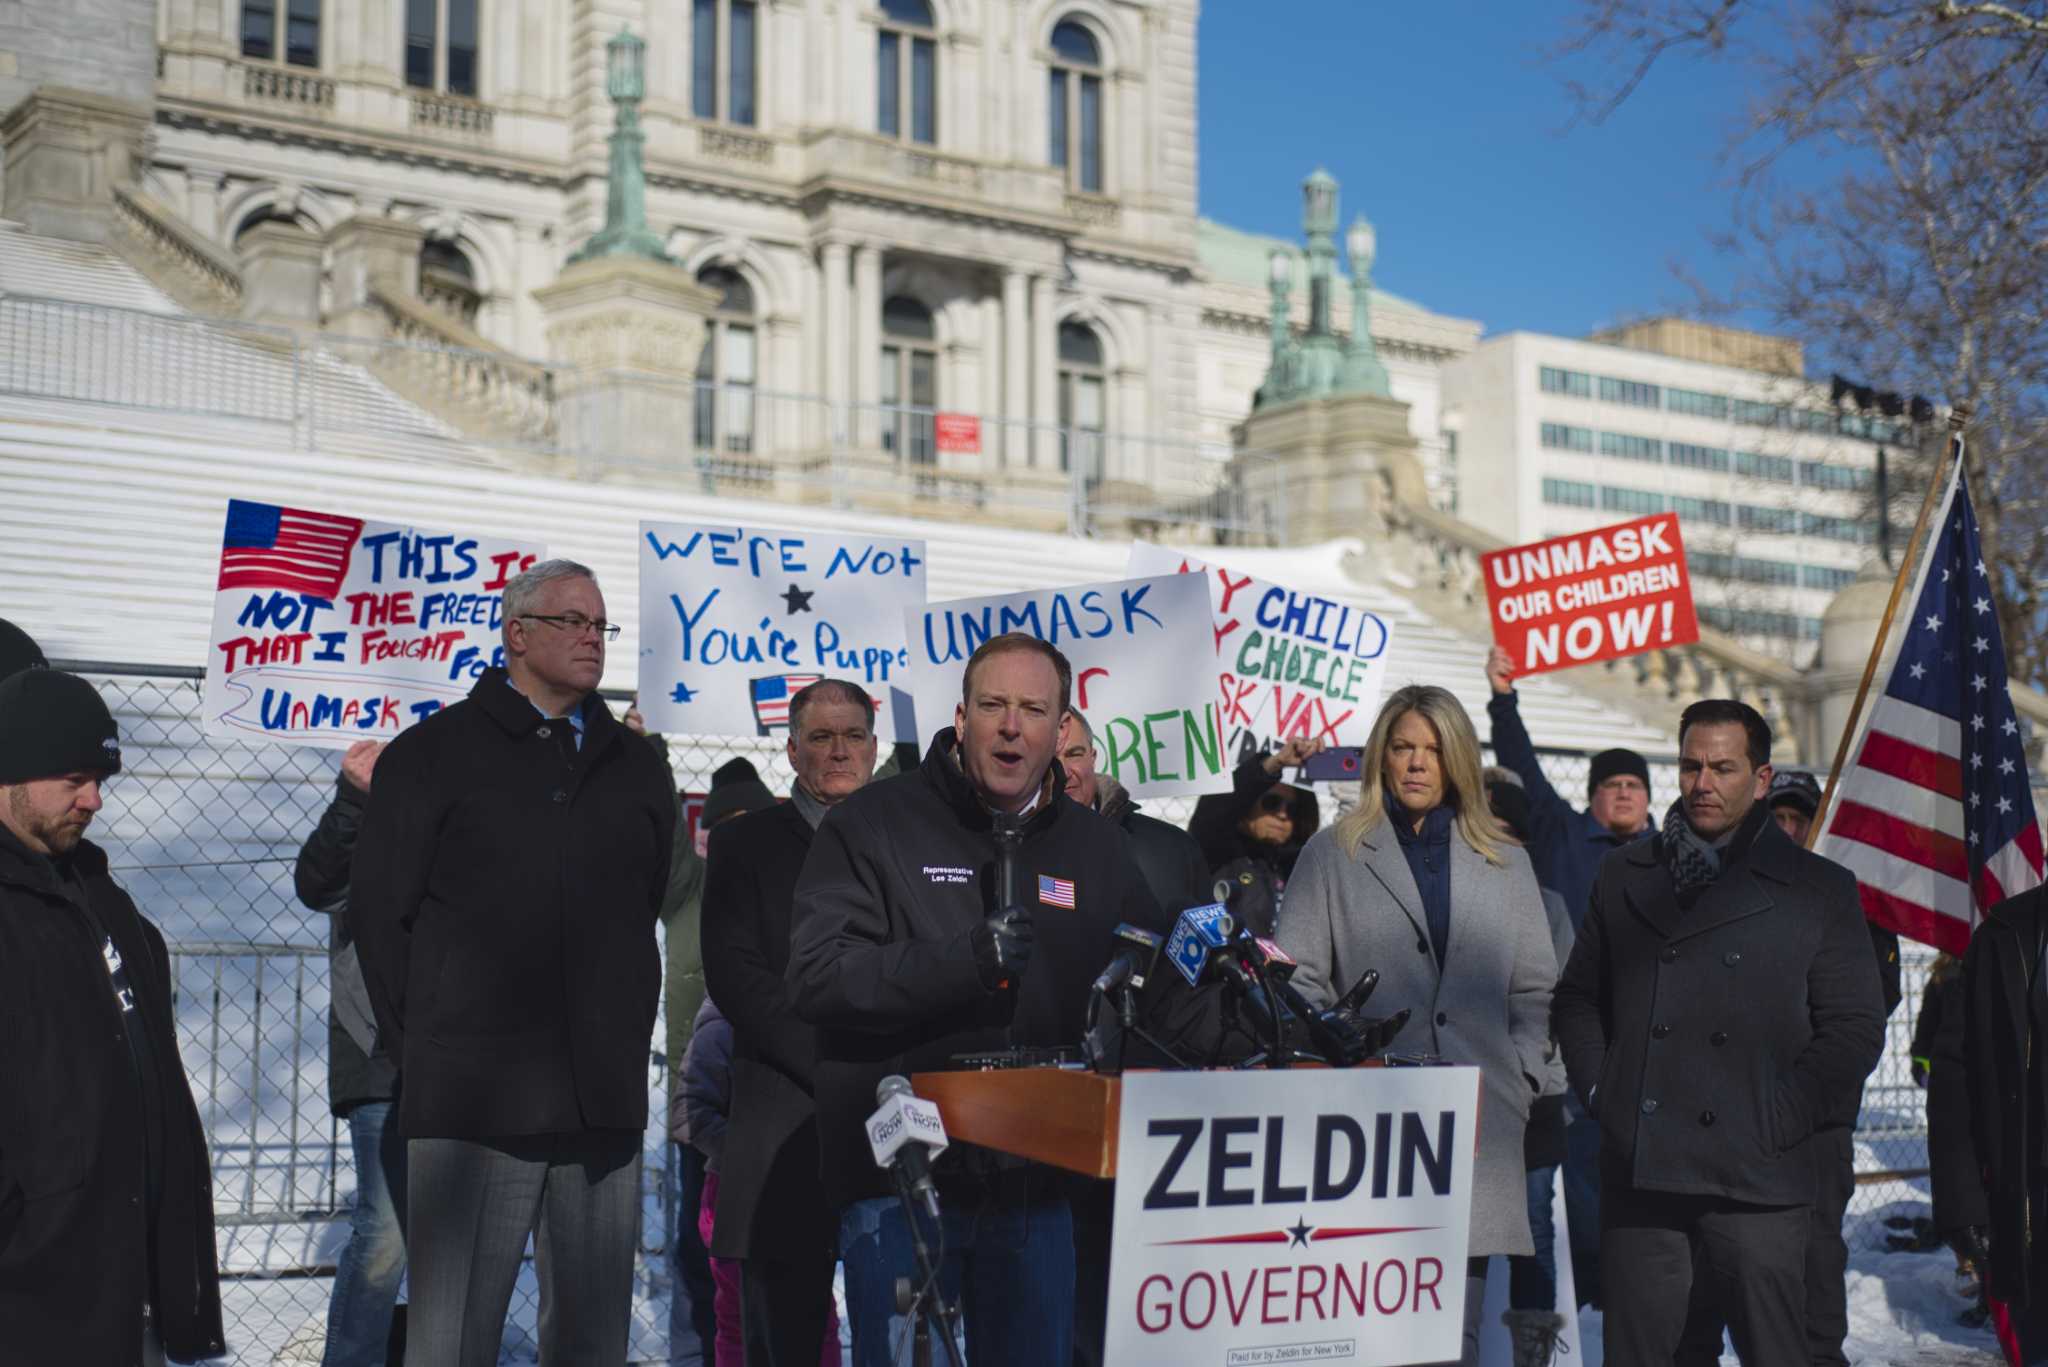 Hochul campaign calls Zeldin 'far-right extremist' in solicitation